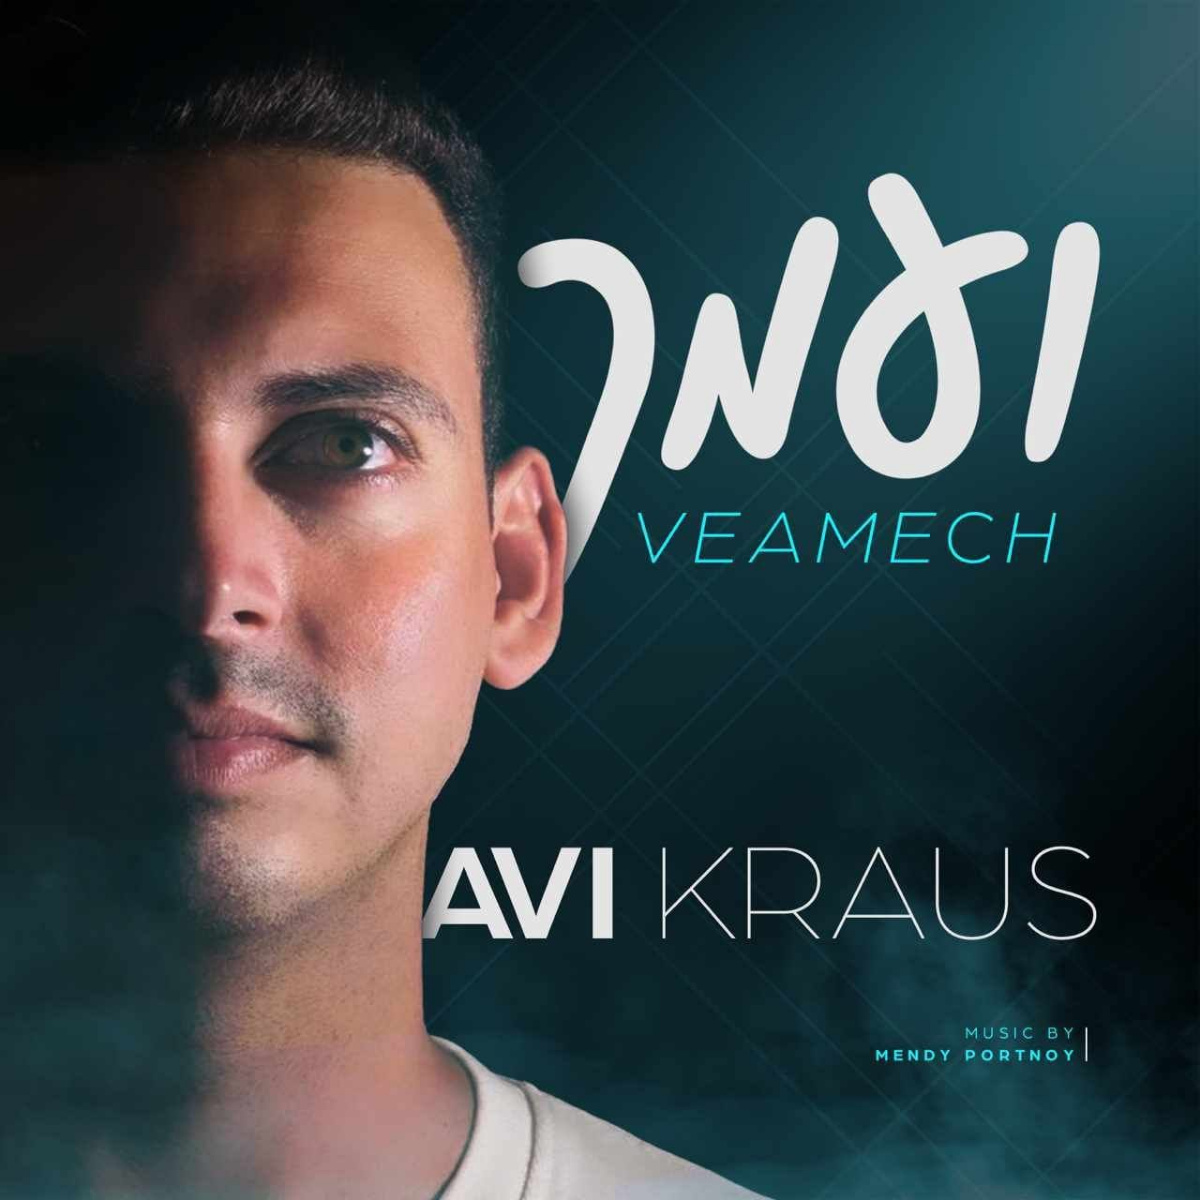 Avi Kraus - Veamech (Single)